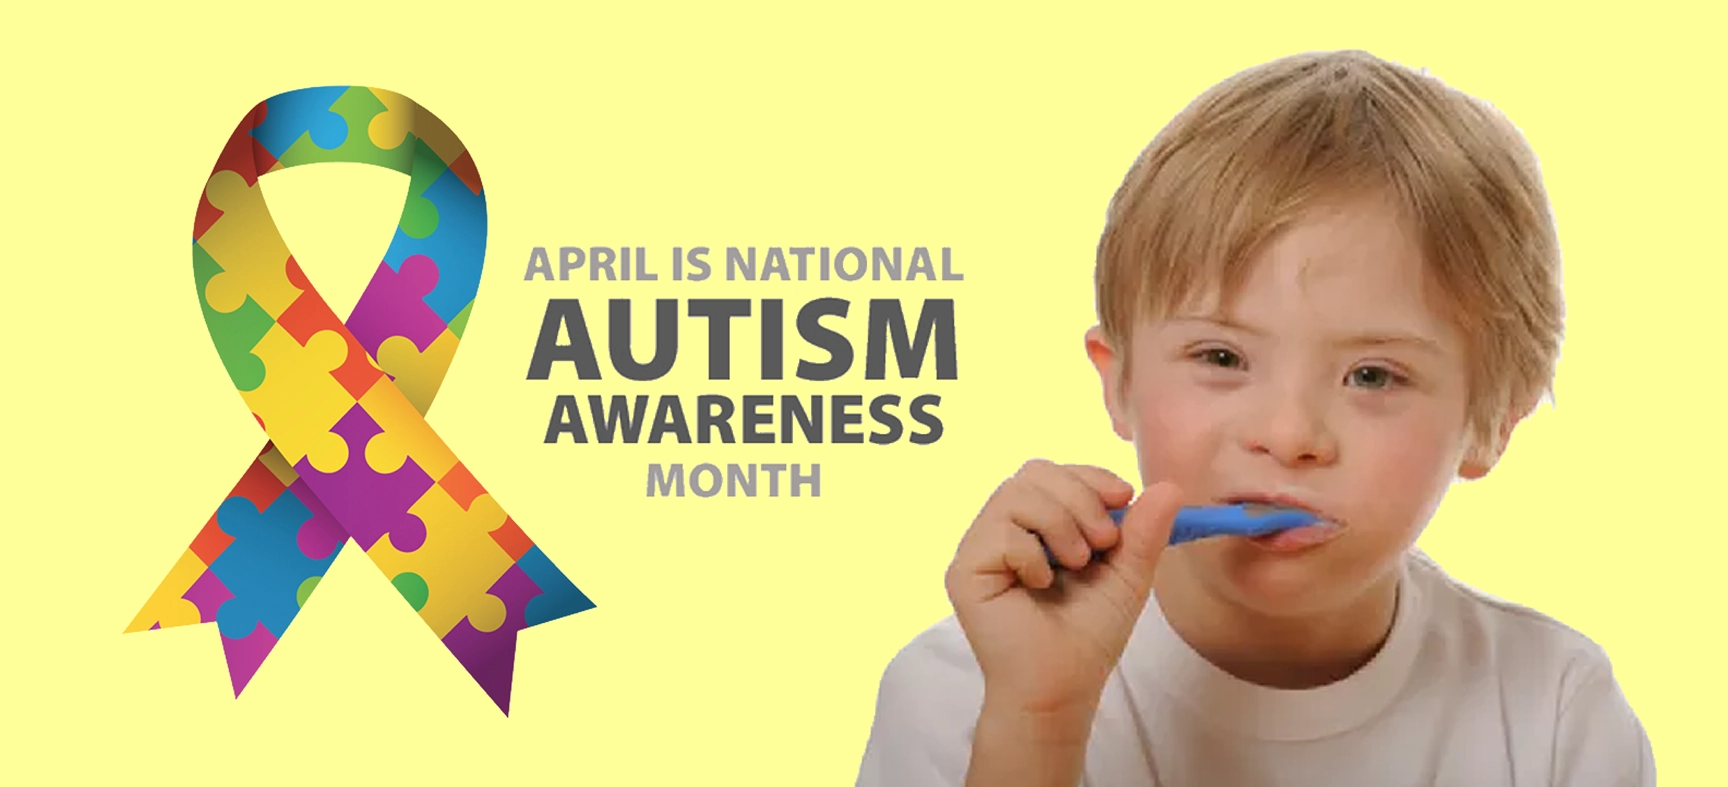 April is National Autism Awareness Month